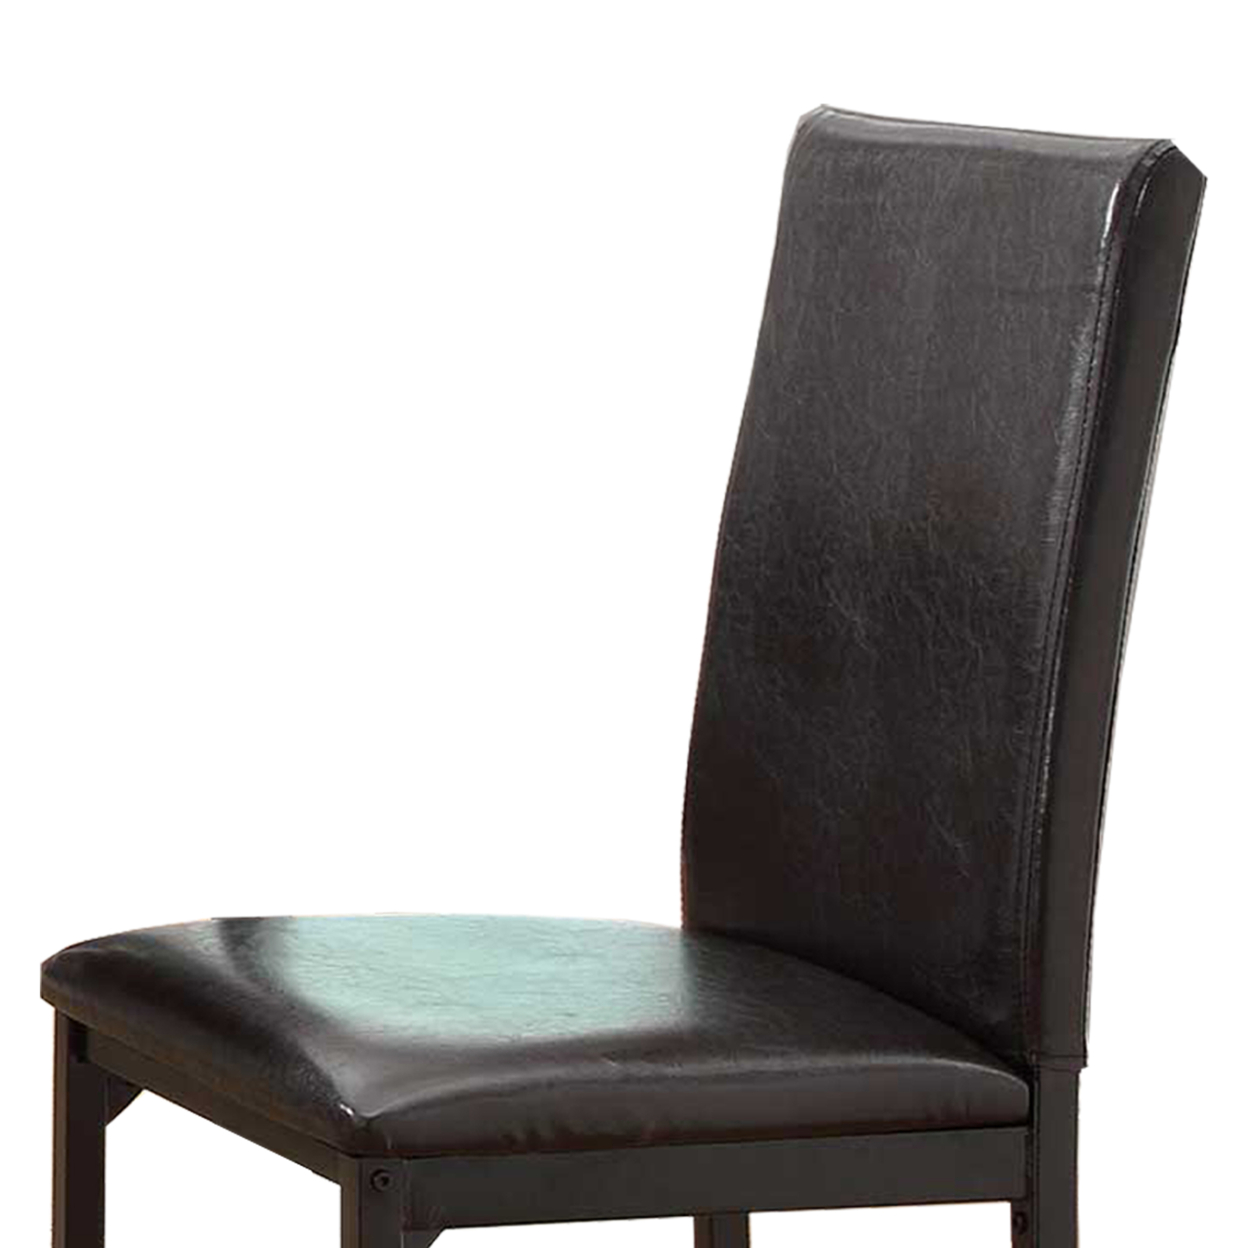 Leatherette Upholstered Counter Height Metal Frame Side Chair, Dark Brown (Set Of 4)- Saltoro Sherpi